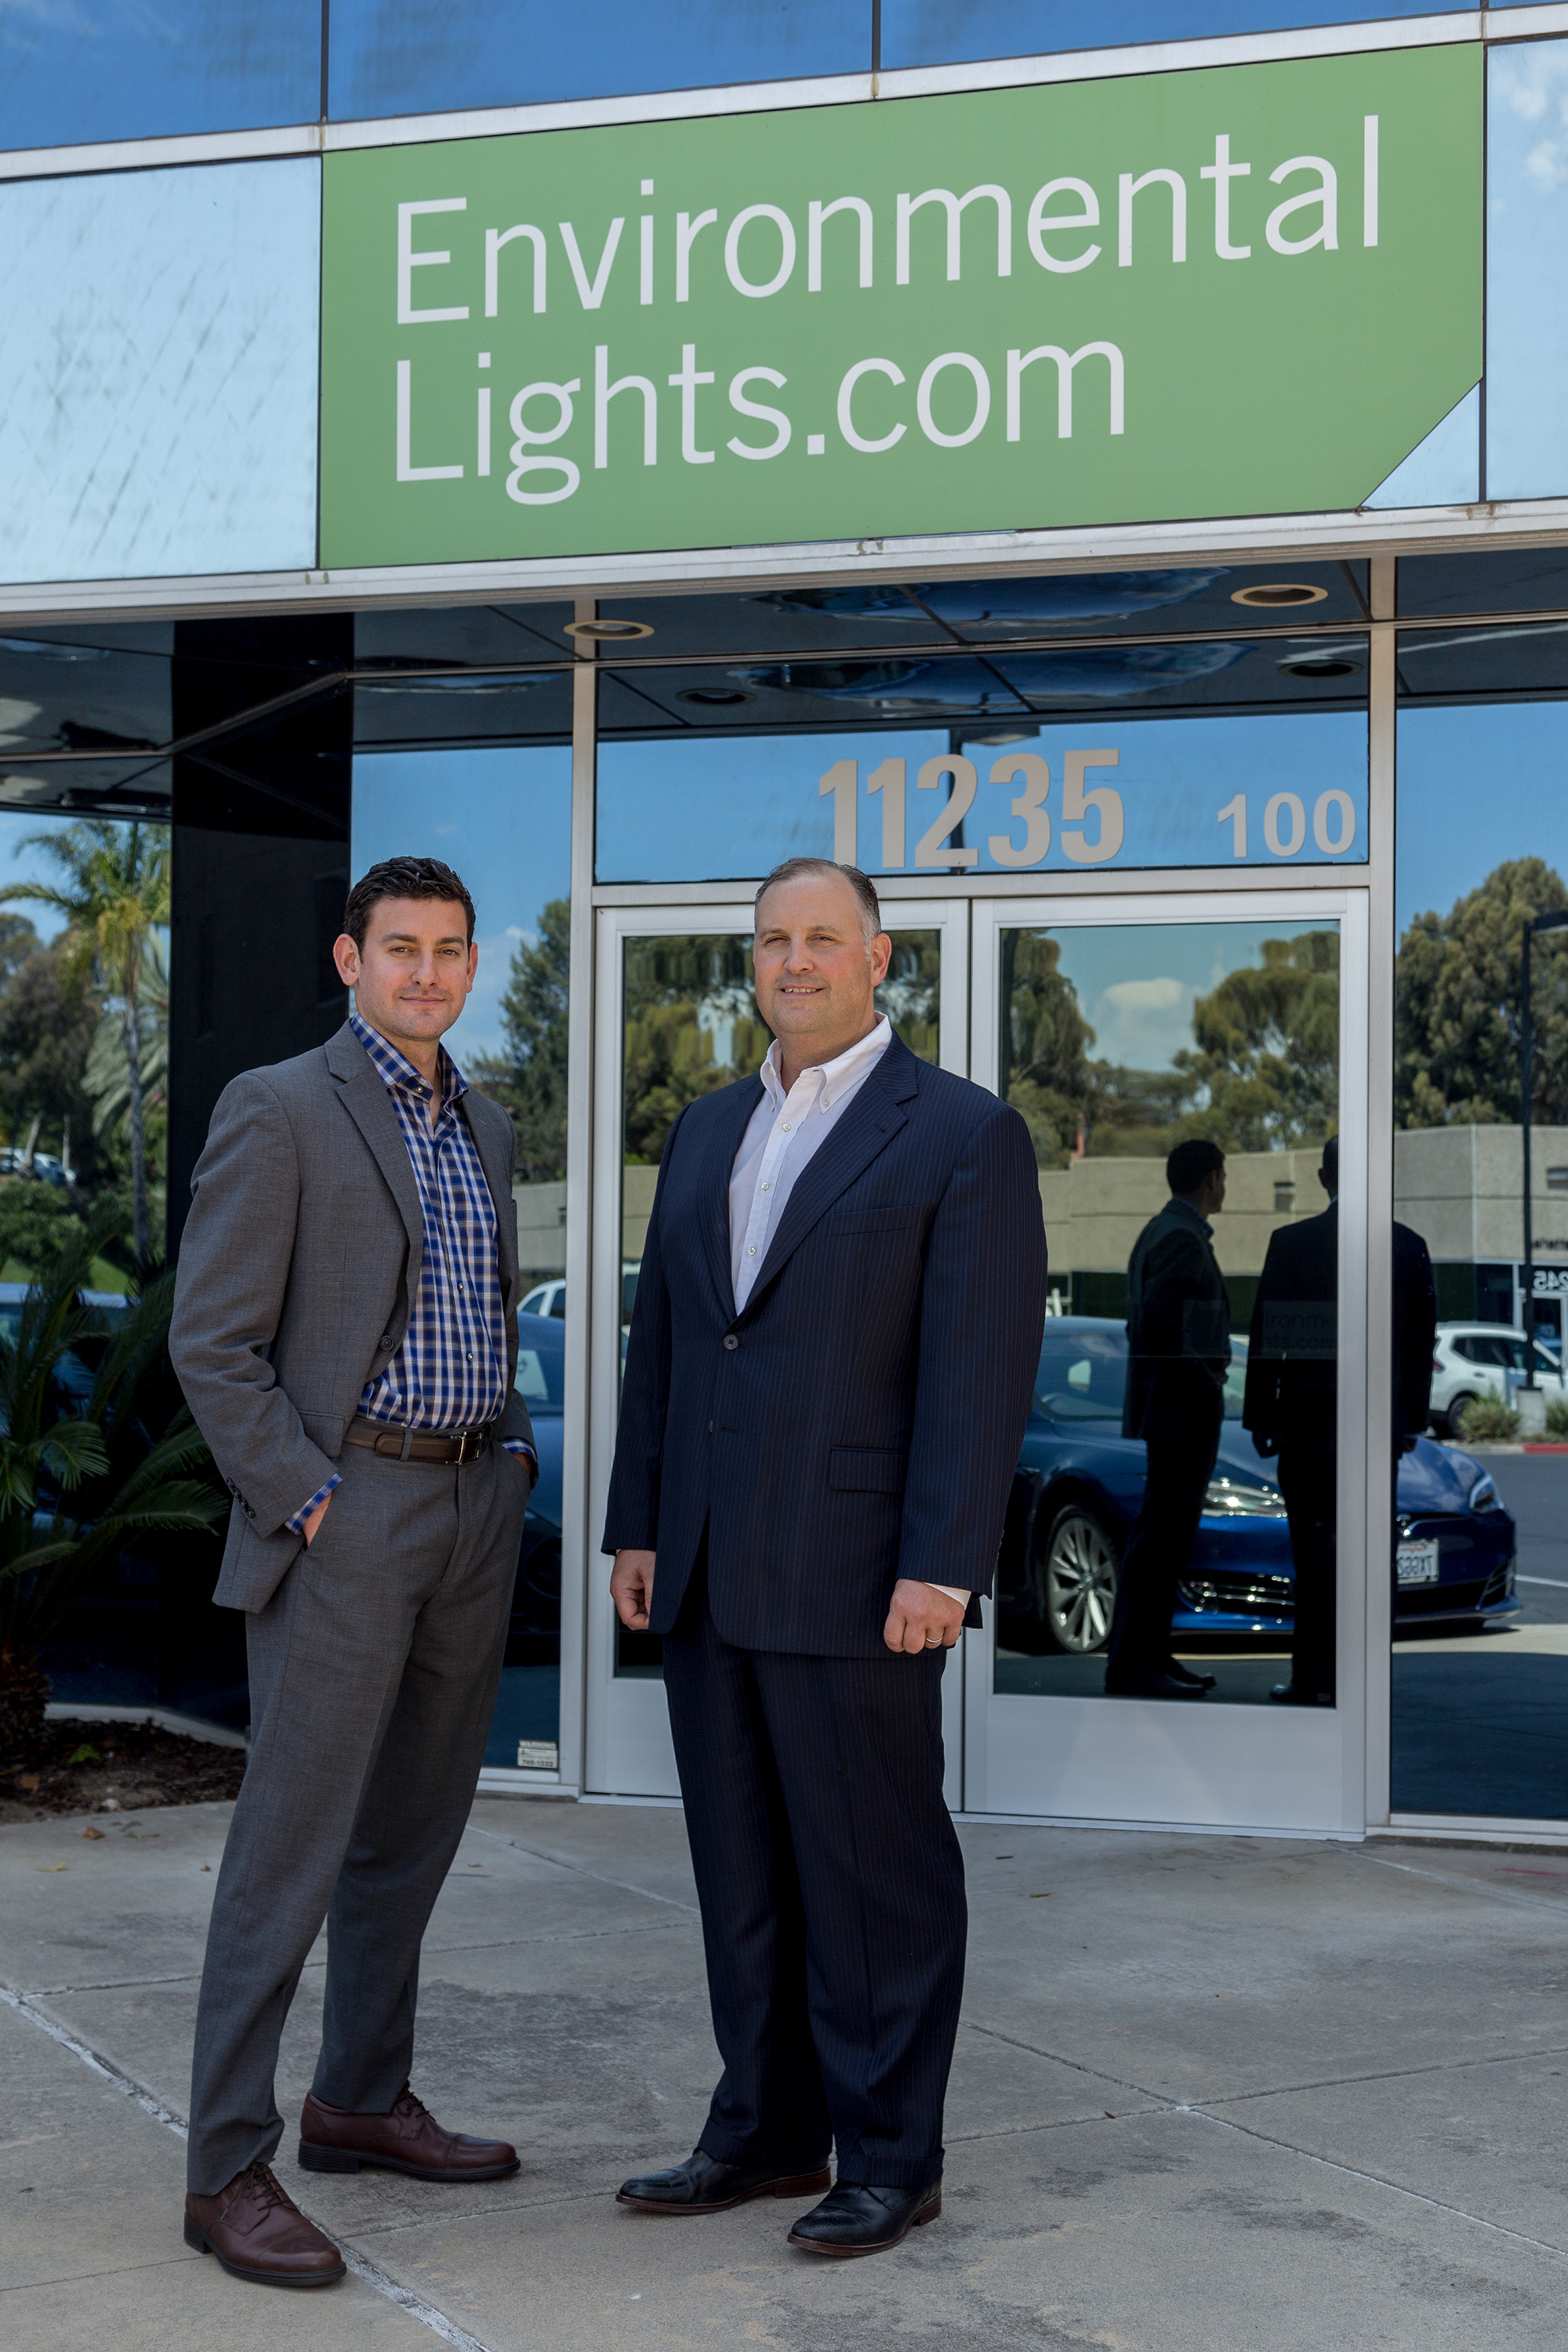 Jordan Brooks, President, and Jamison Day, CEO of Environmental Lights